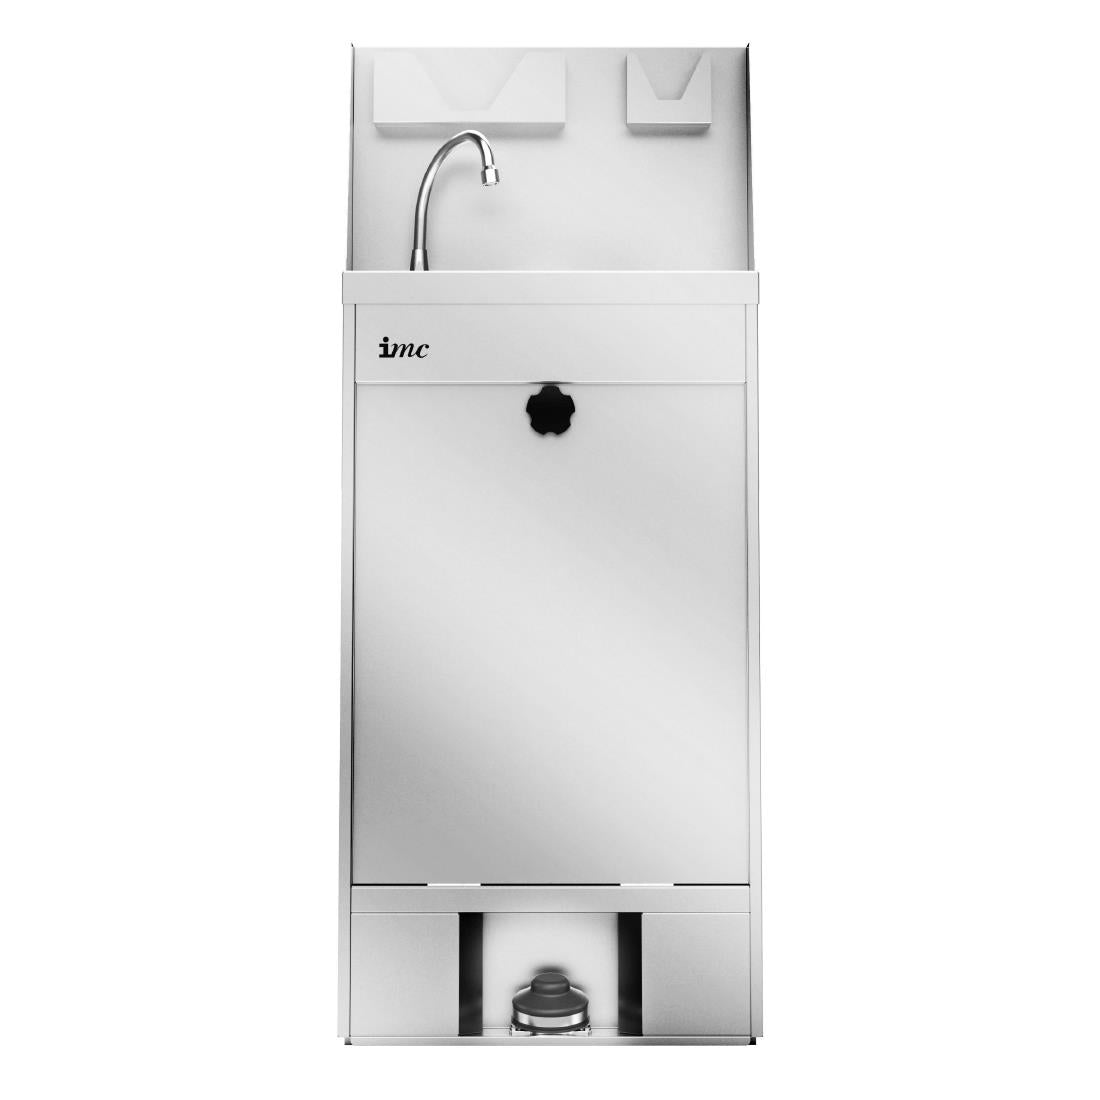 IMC Mobile Hand Wash Station 20Ltr JD Catering Equipment Solutions Ltd